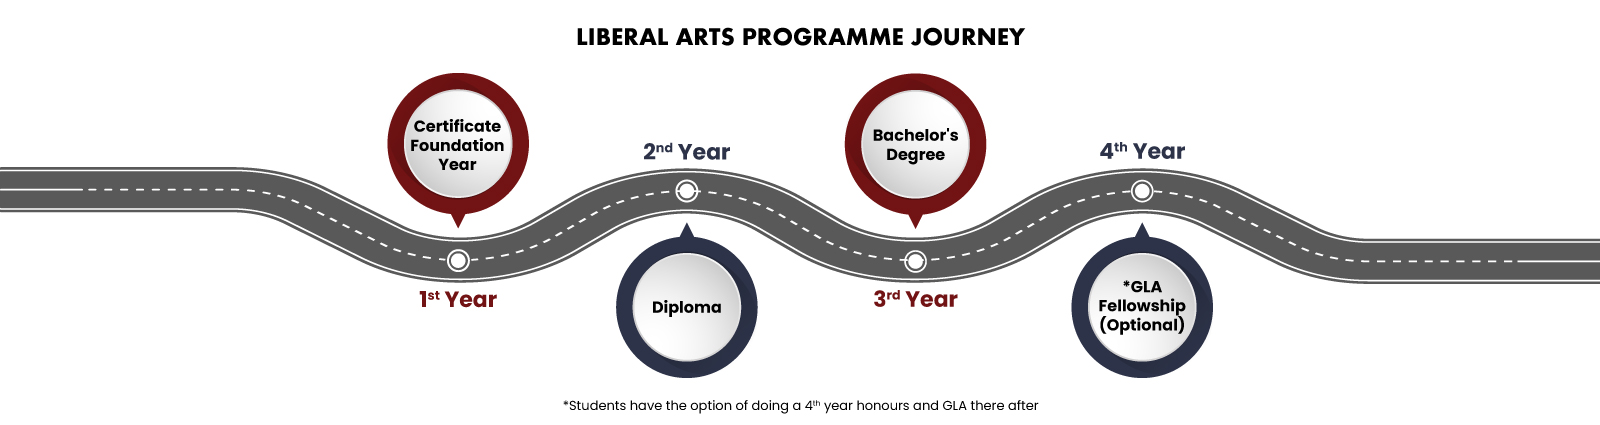 Liberal Arts Programme Journey